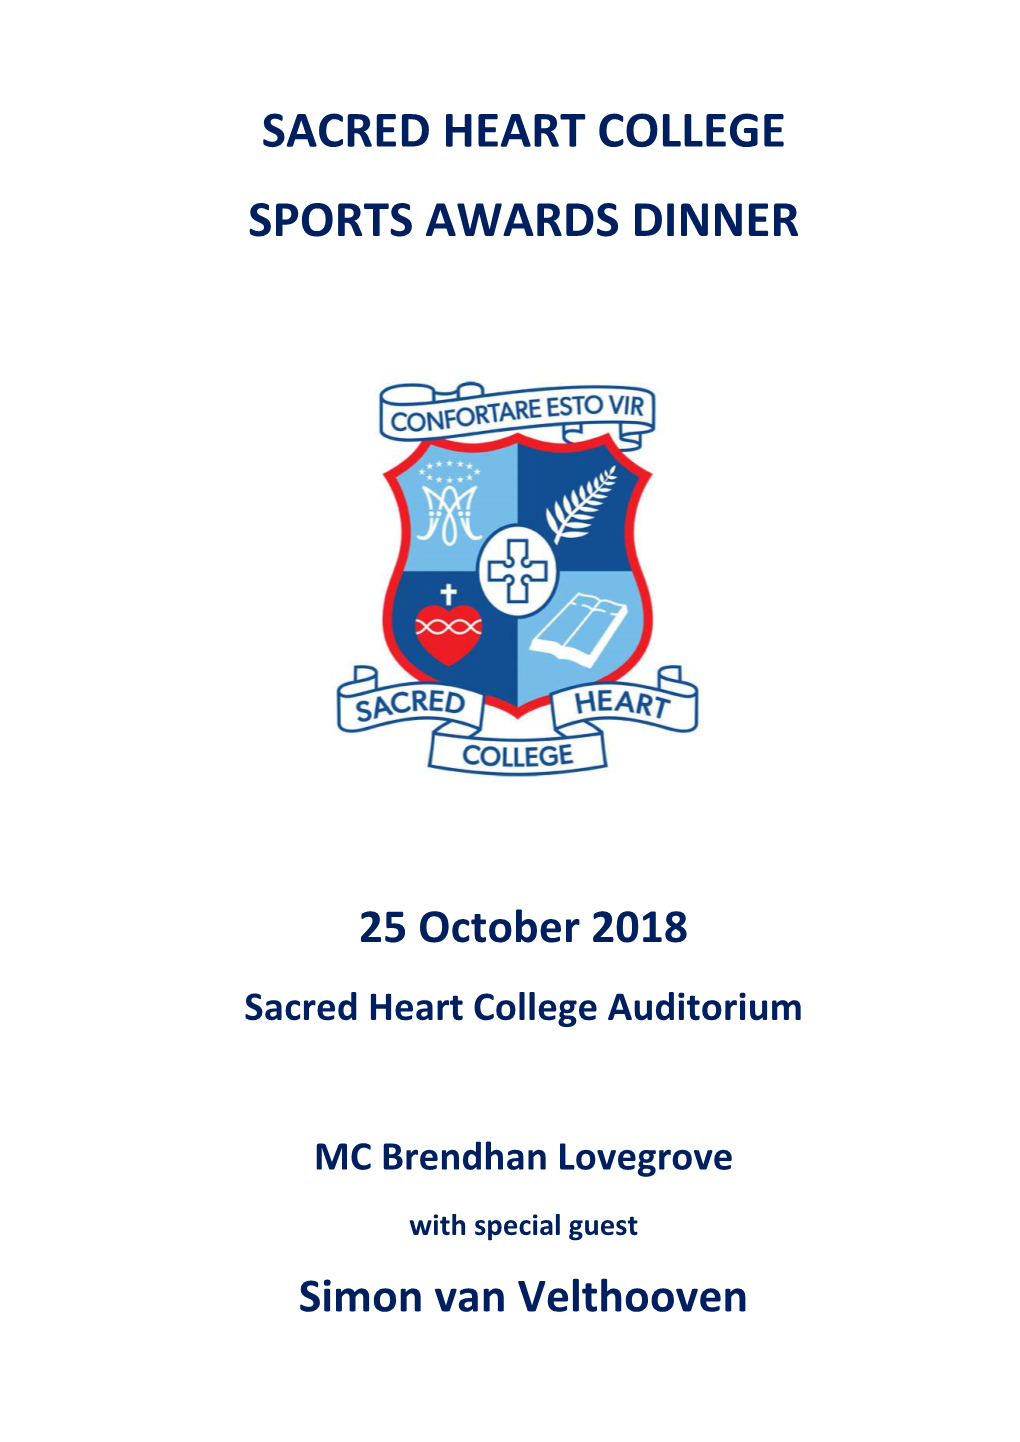 Sacred Heart College Sports Awards Dinner